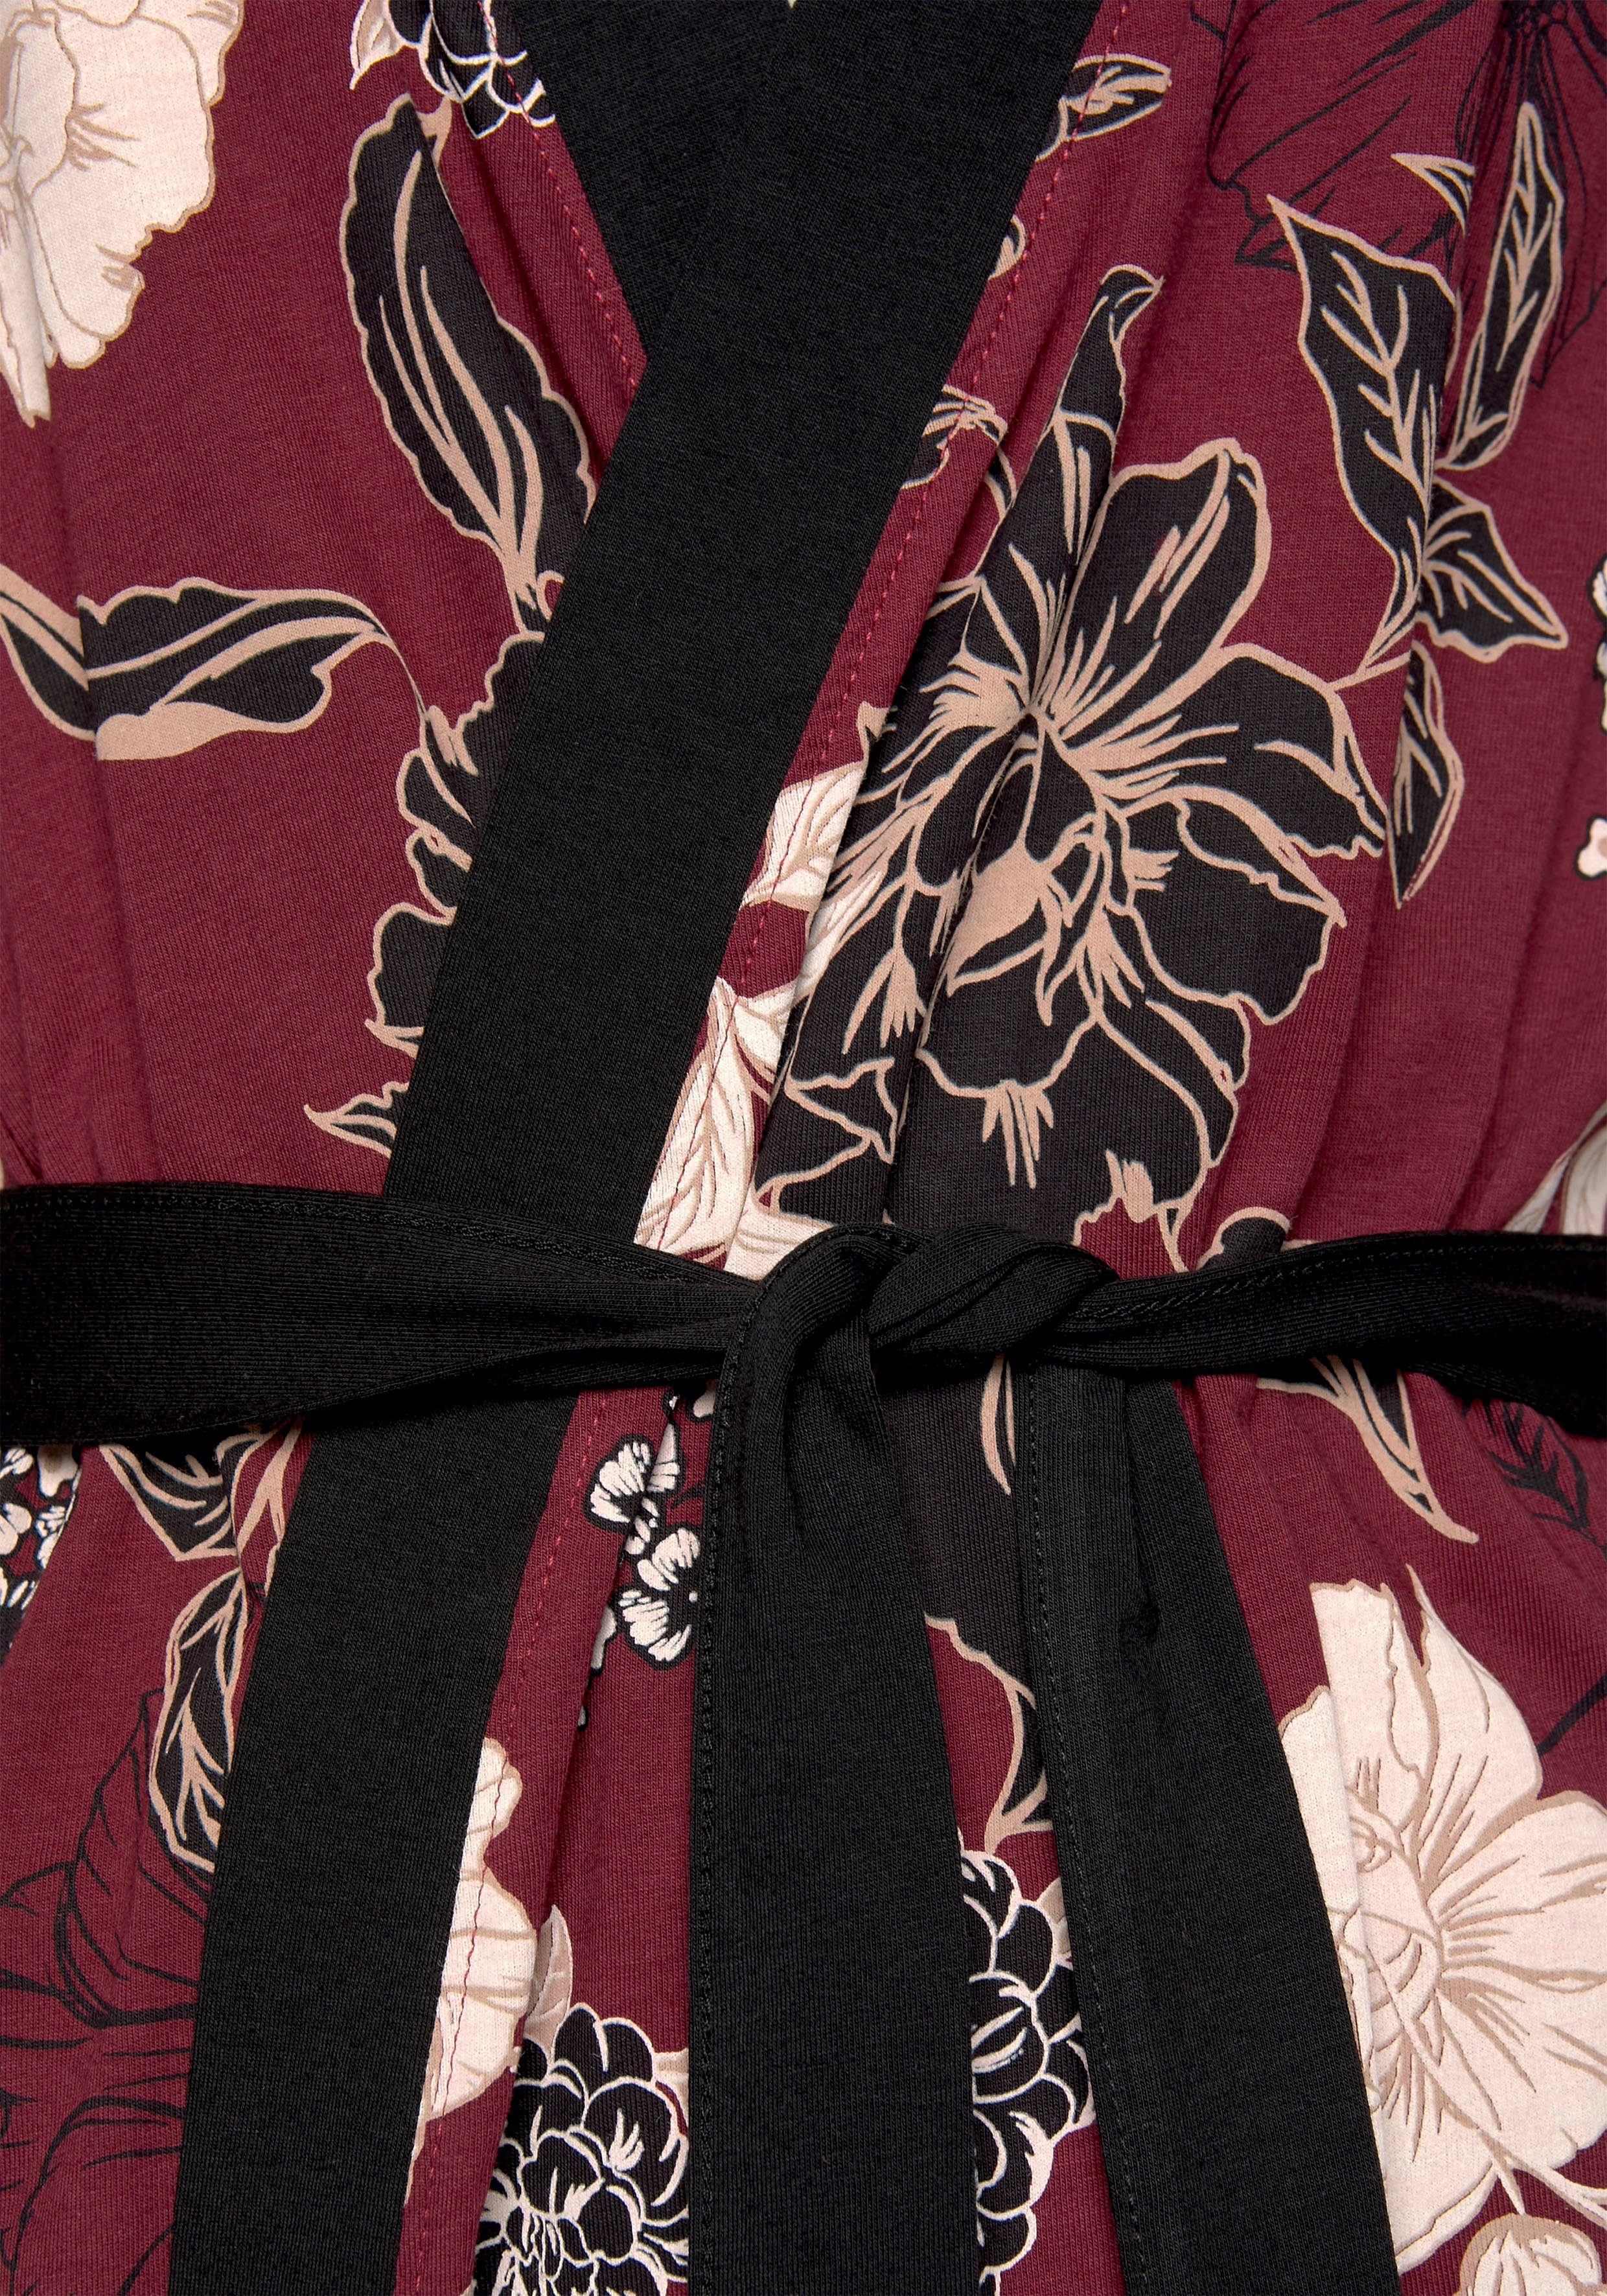 Gürtel, Blumen-Dessin mit Kurzform, s.Oliver bordeaux-schwarz Baumwoll-Mix, Kimono,